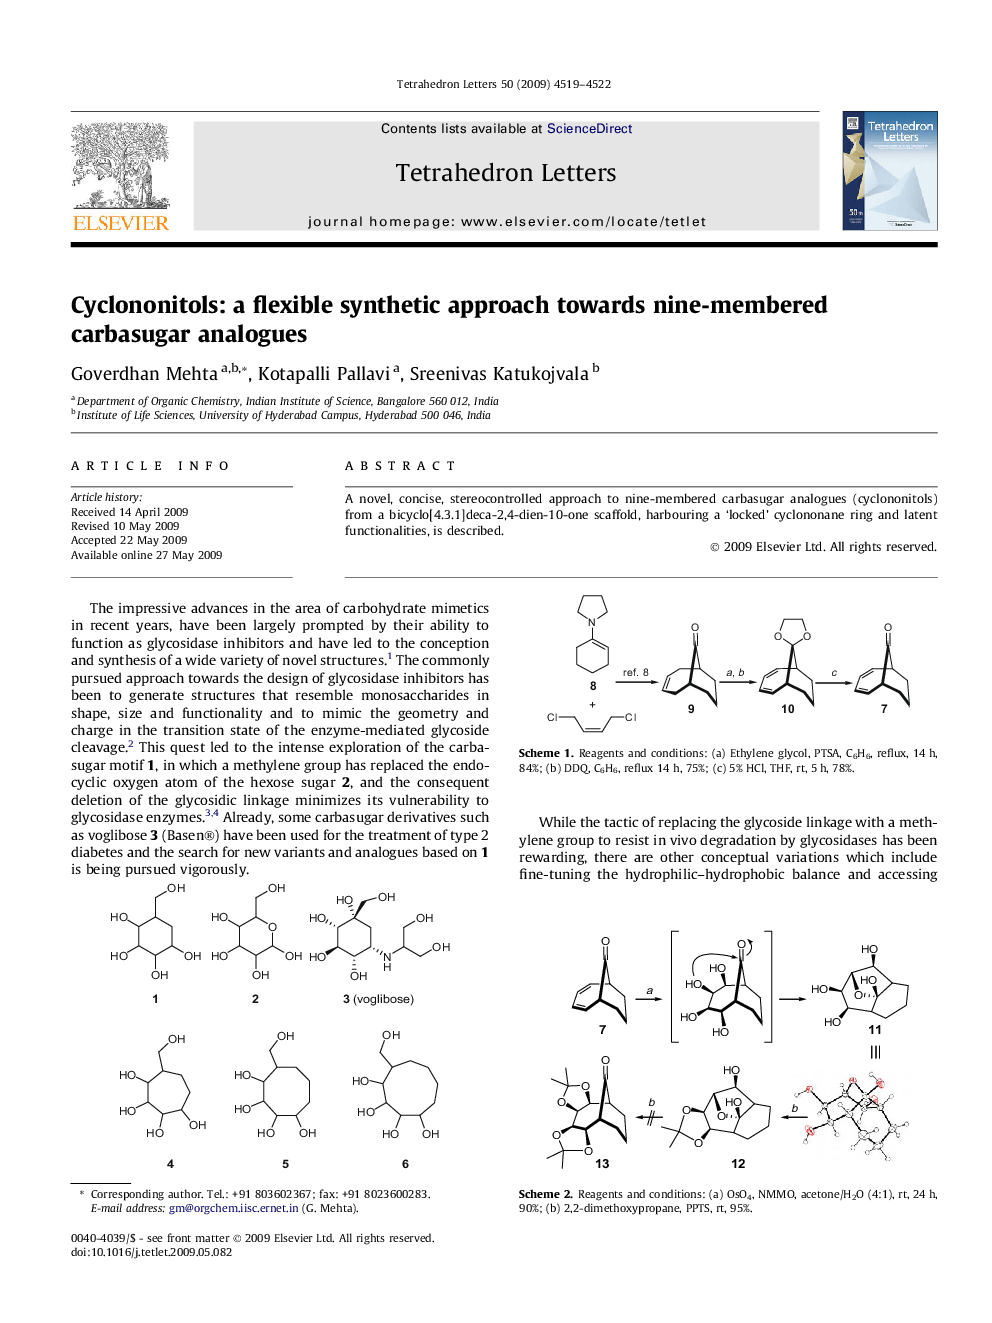 Cyclononitols: a flexible synthetic approach towards nine-membered carbasugar analogues